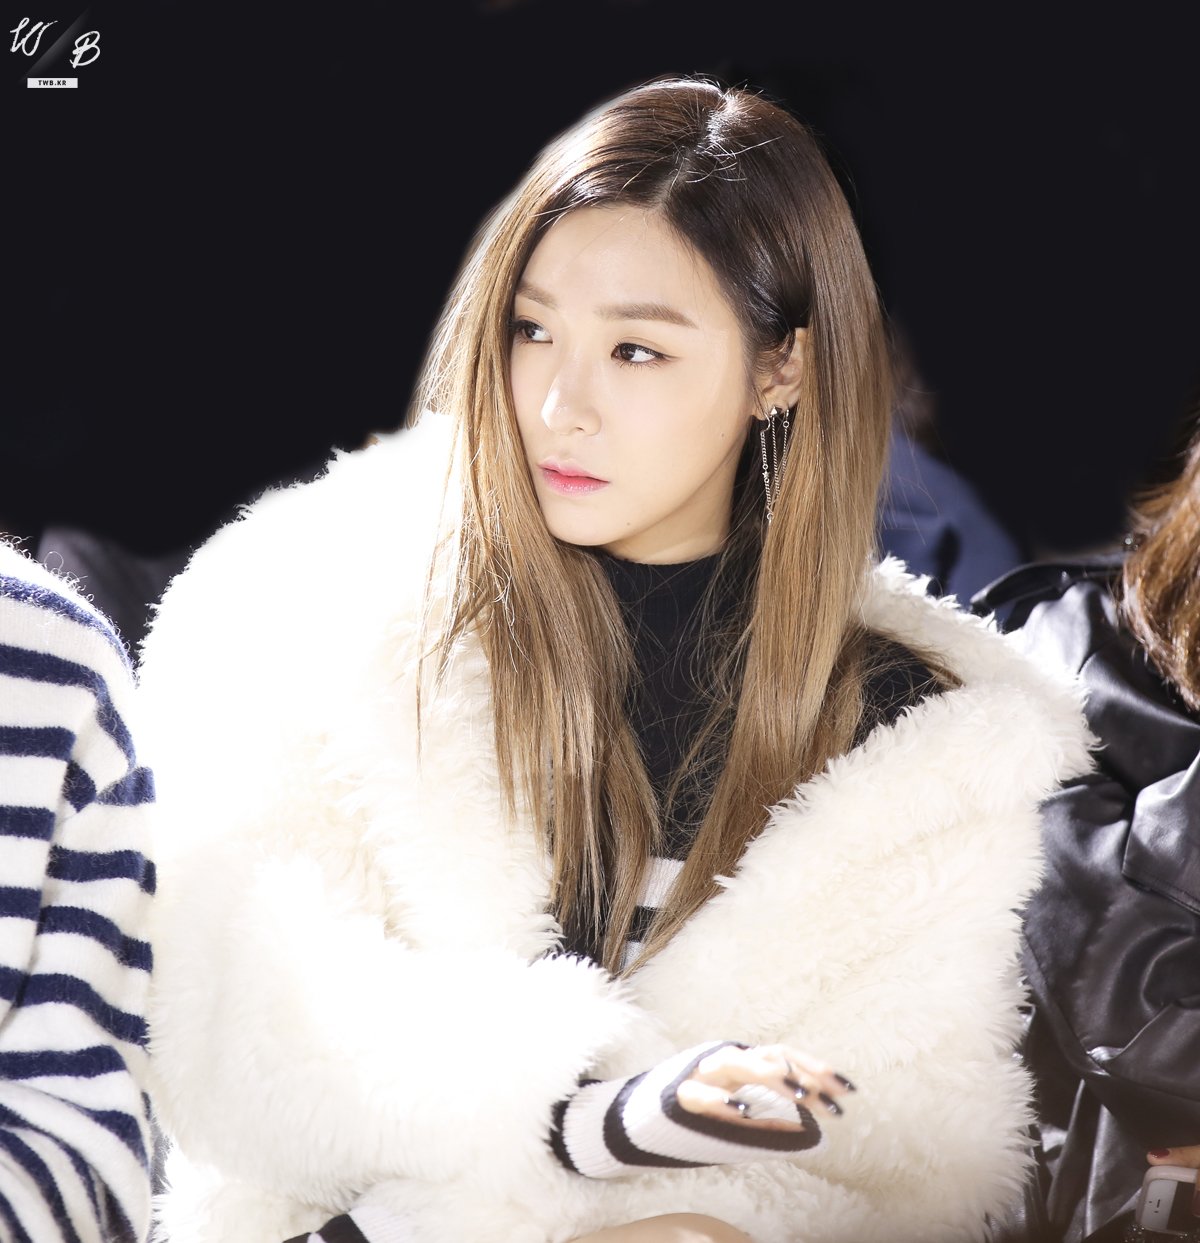 [PIC][17-10-2015]Tiffany tham dự "Hera Seoul Fashion Week 2016SS 'Lucky Chouette'" vào tối nay - Page 2 XSLHxsoGal-3000x3000